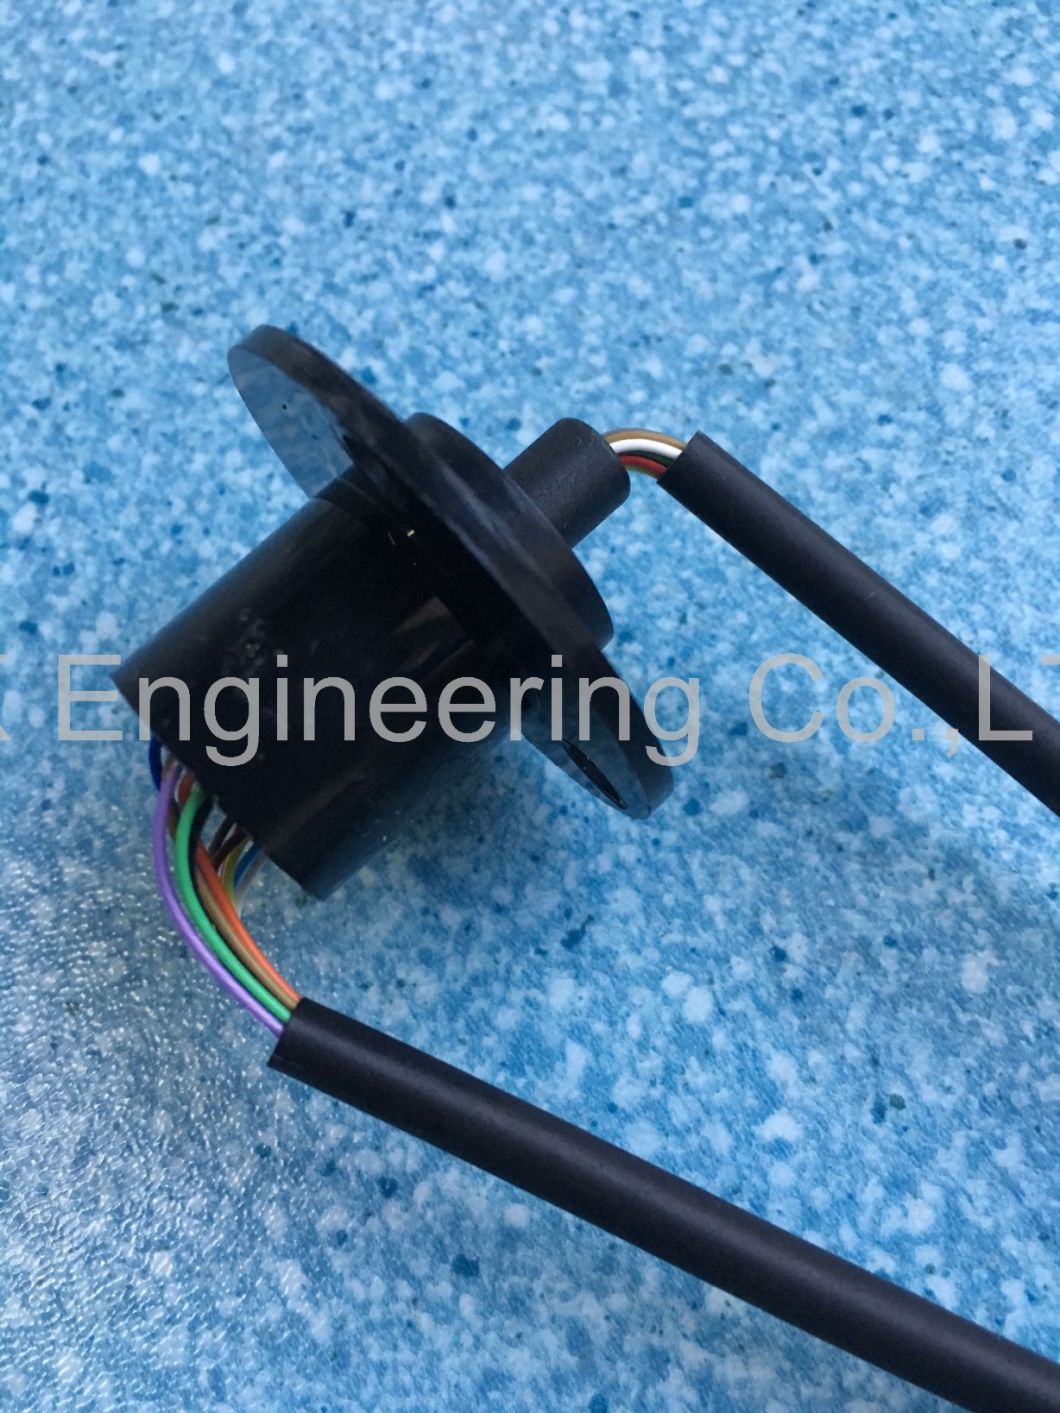 Gtk-Cm36 Capsule, Under 50 Mbps 9-Circuit Slip Ring